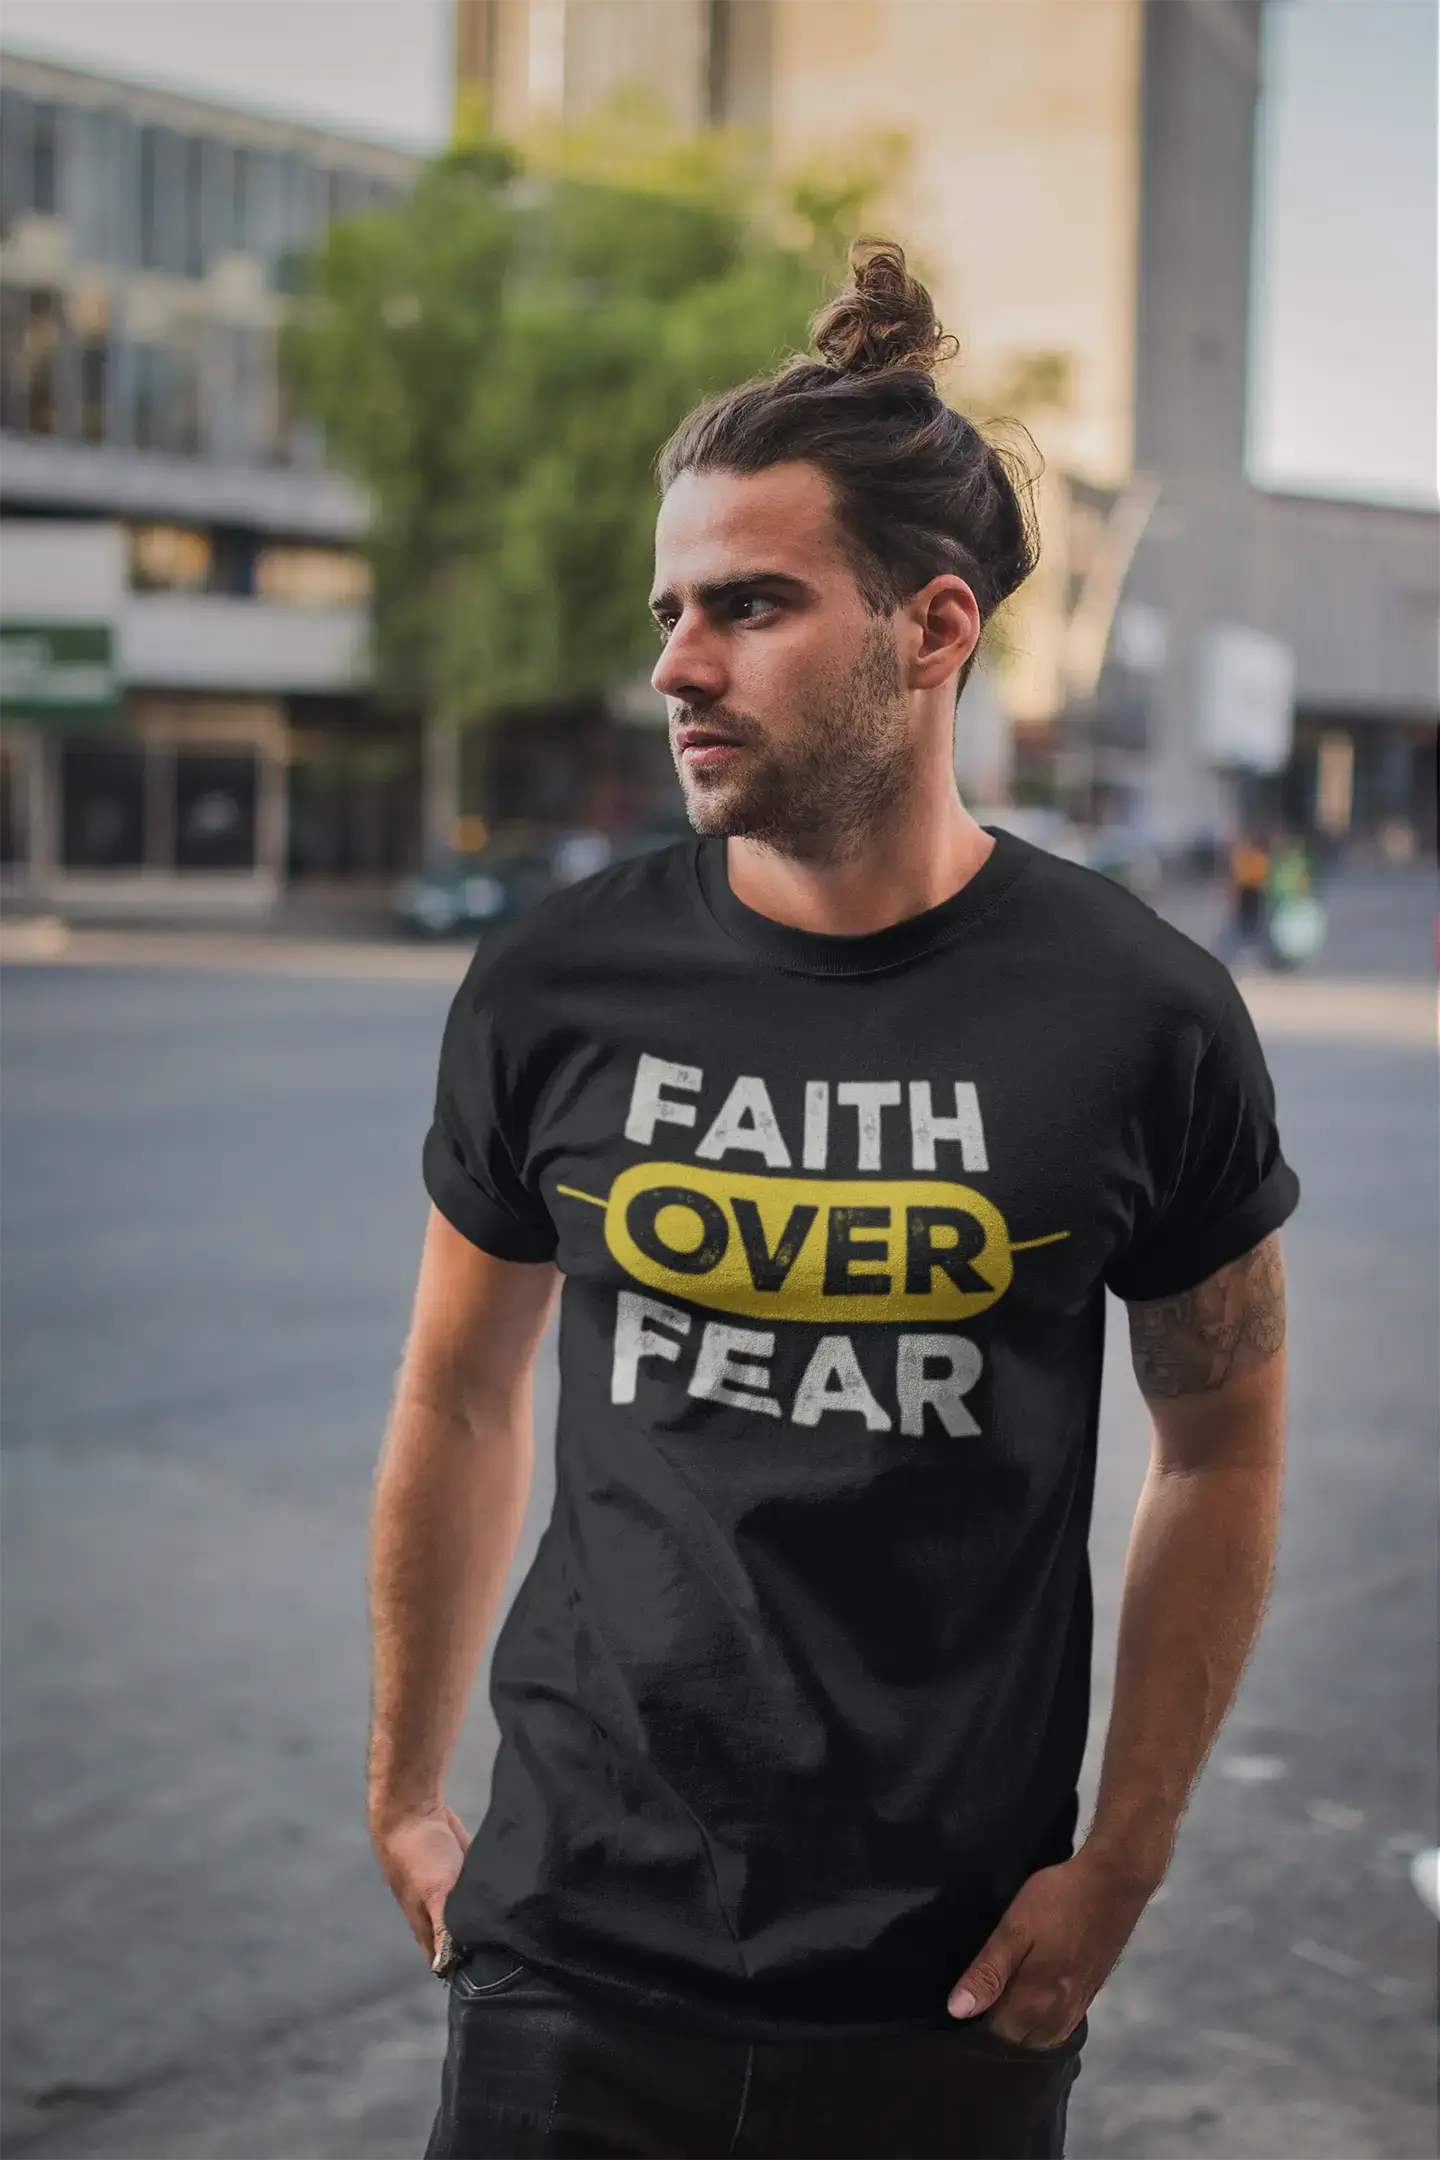 ULTRABASIC Men's T-Shirt Faith over Fear - Bible Religious Shirt